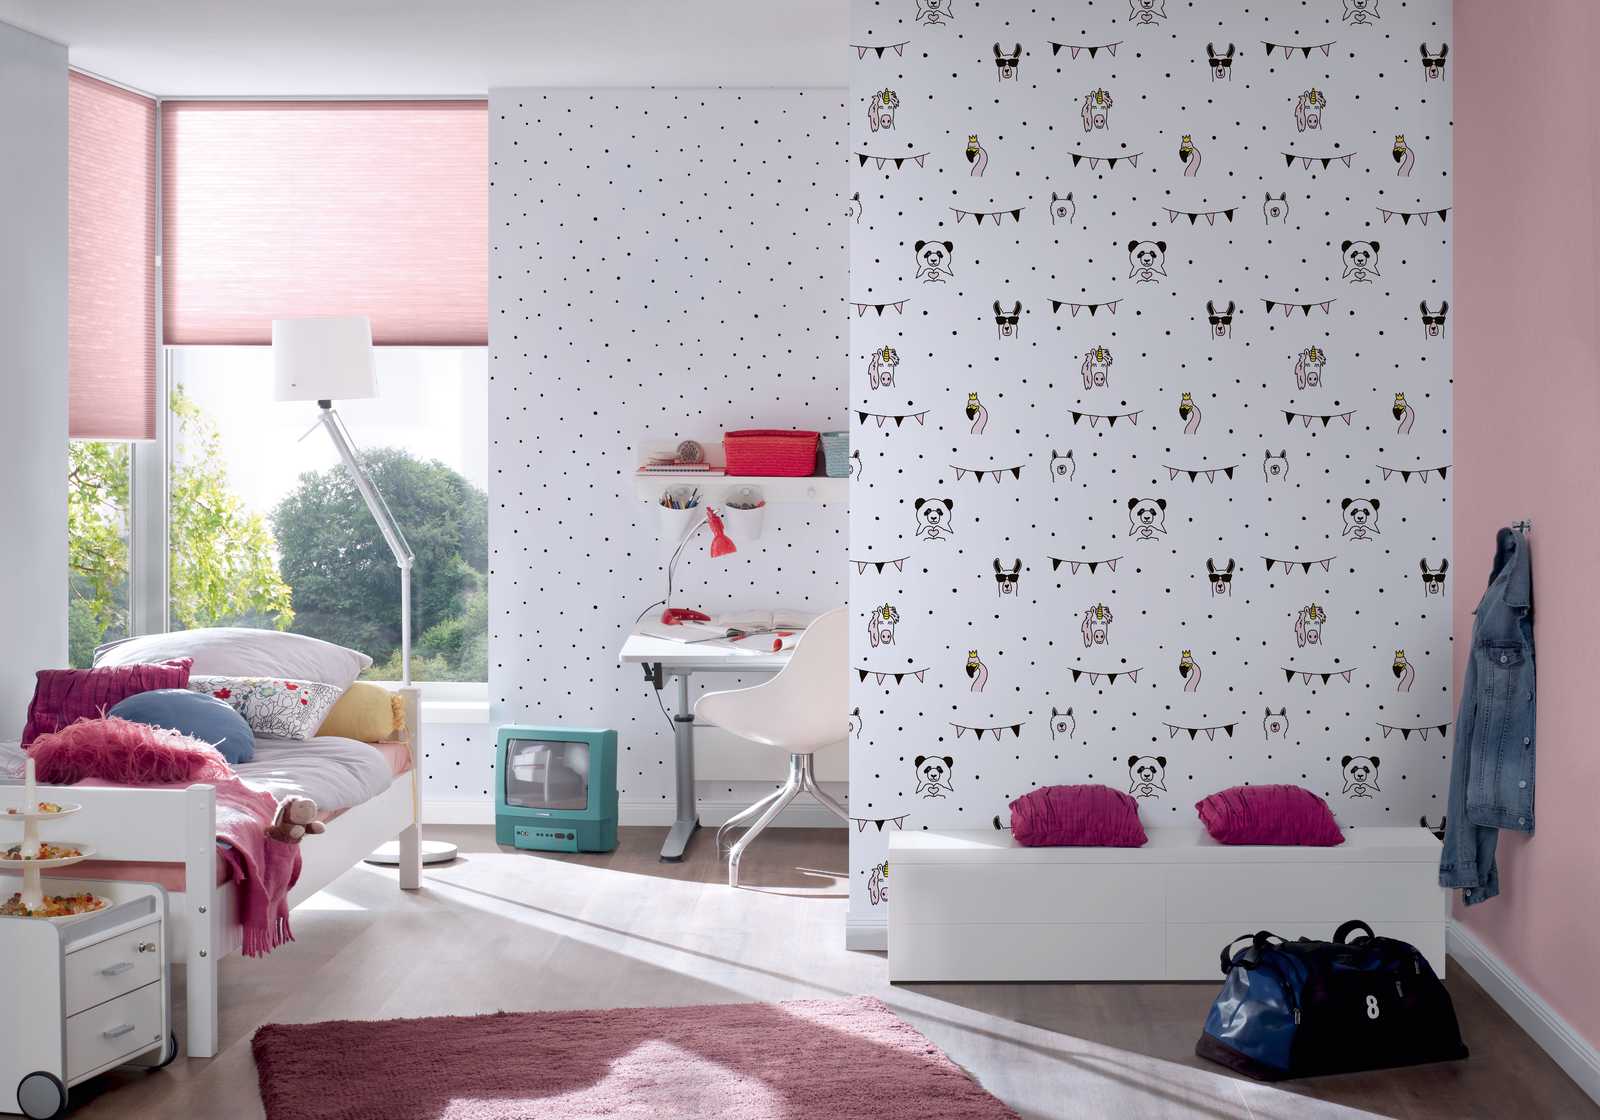             Children wallpaper with animal & dot pattern - pink, black, white
        